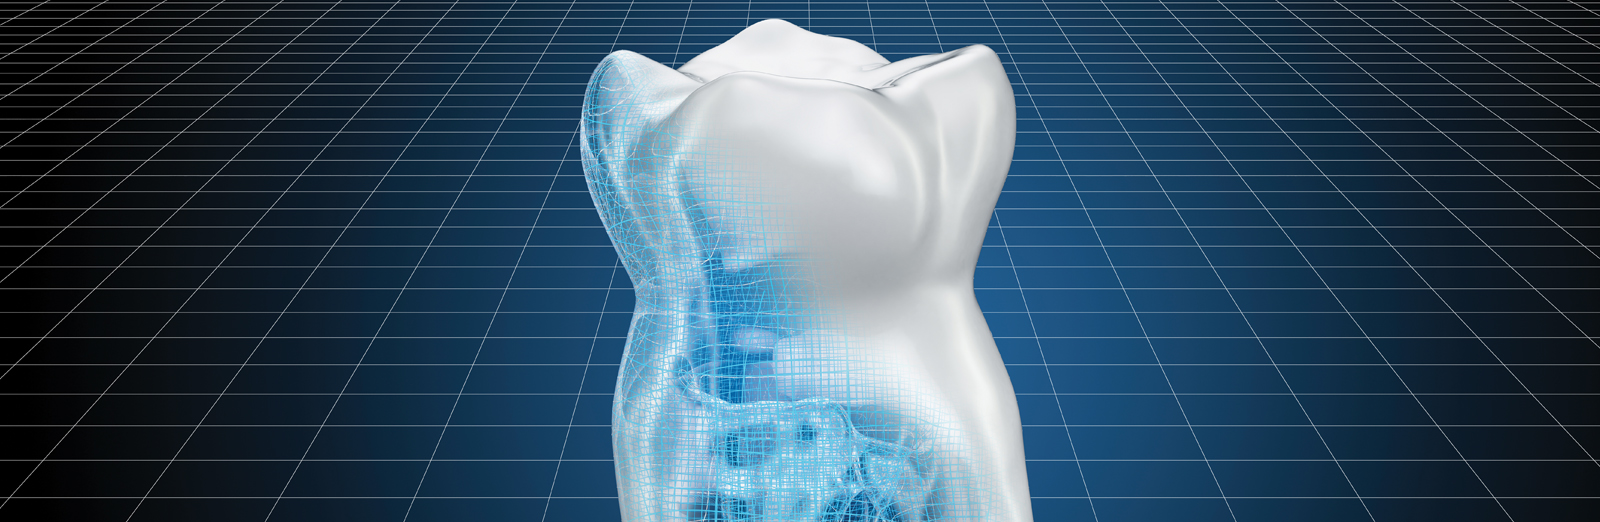 digital-tooth-1600x522.jpg